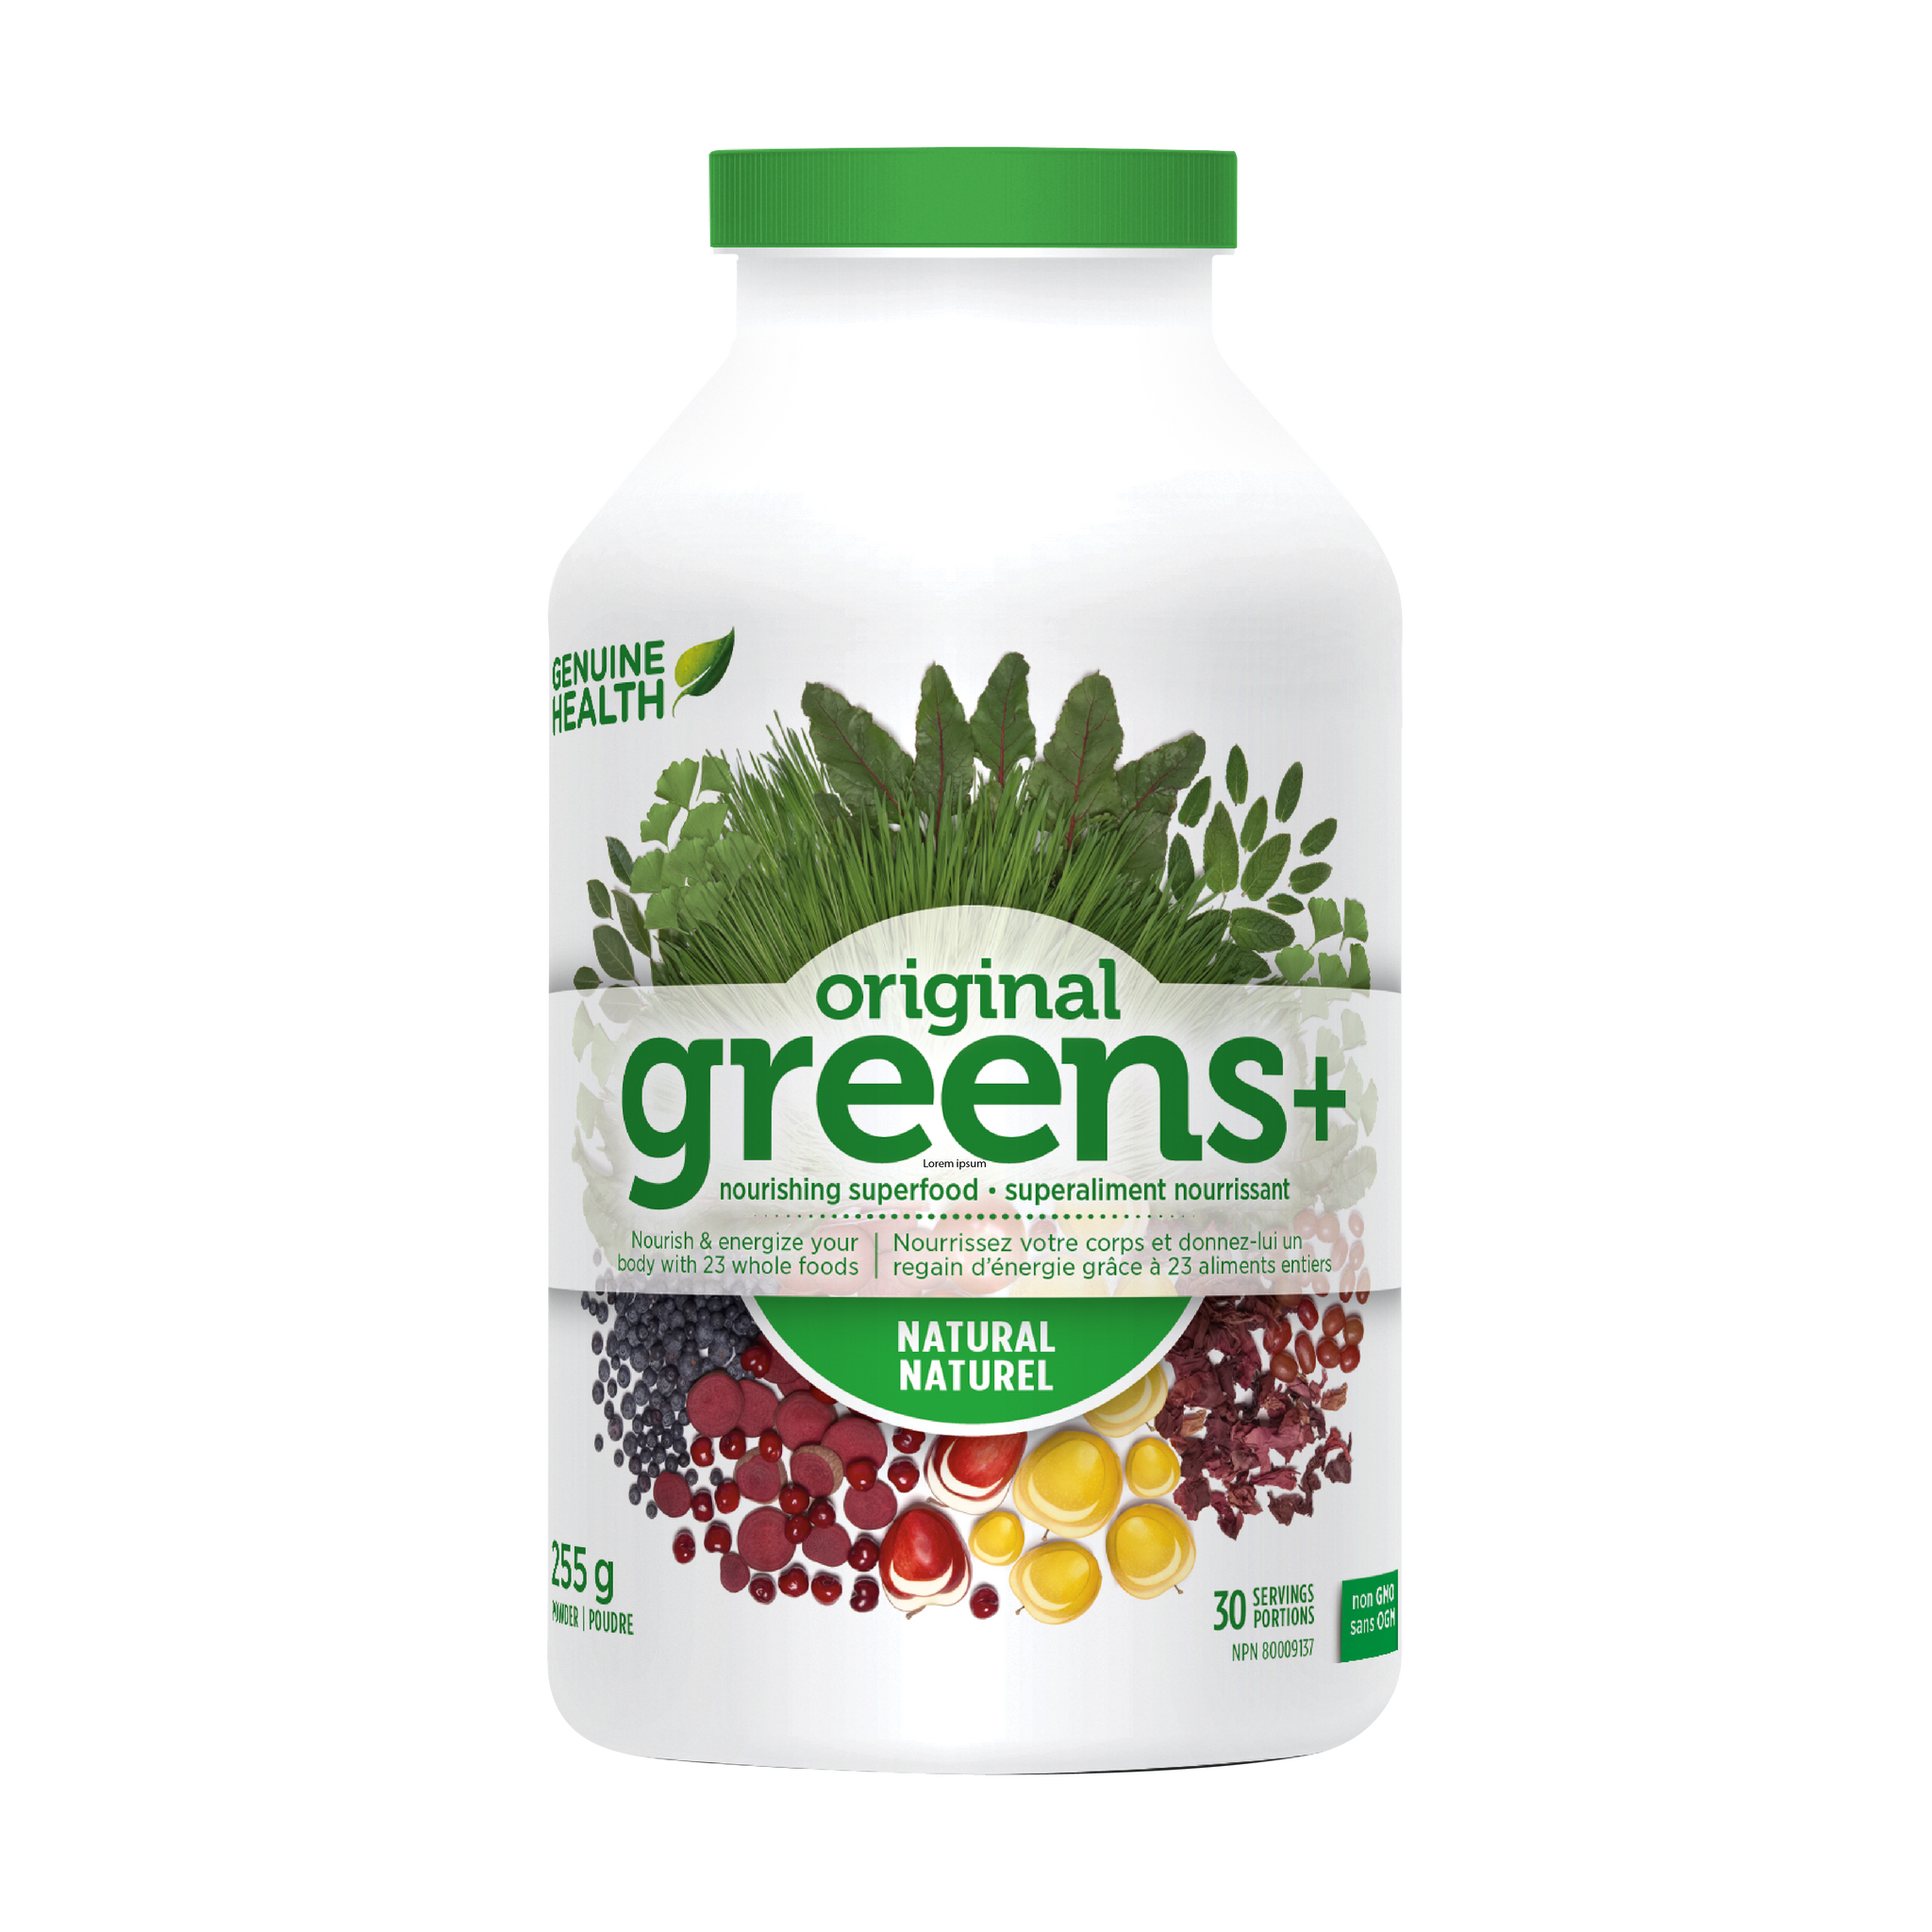 Genuine Health greens+ (255/510 g)